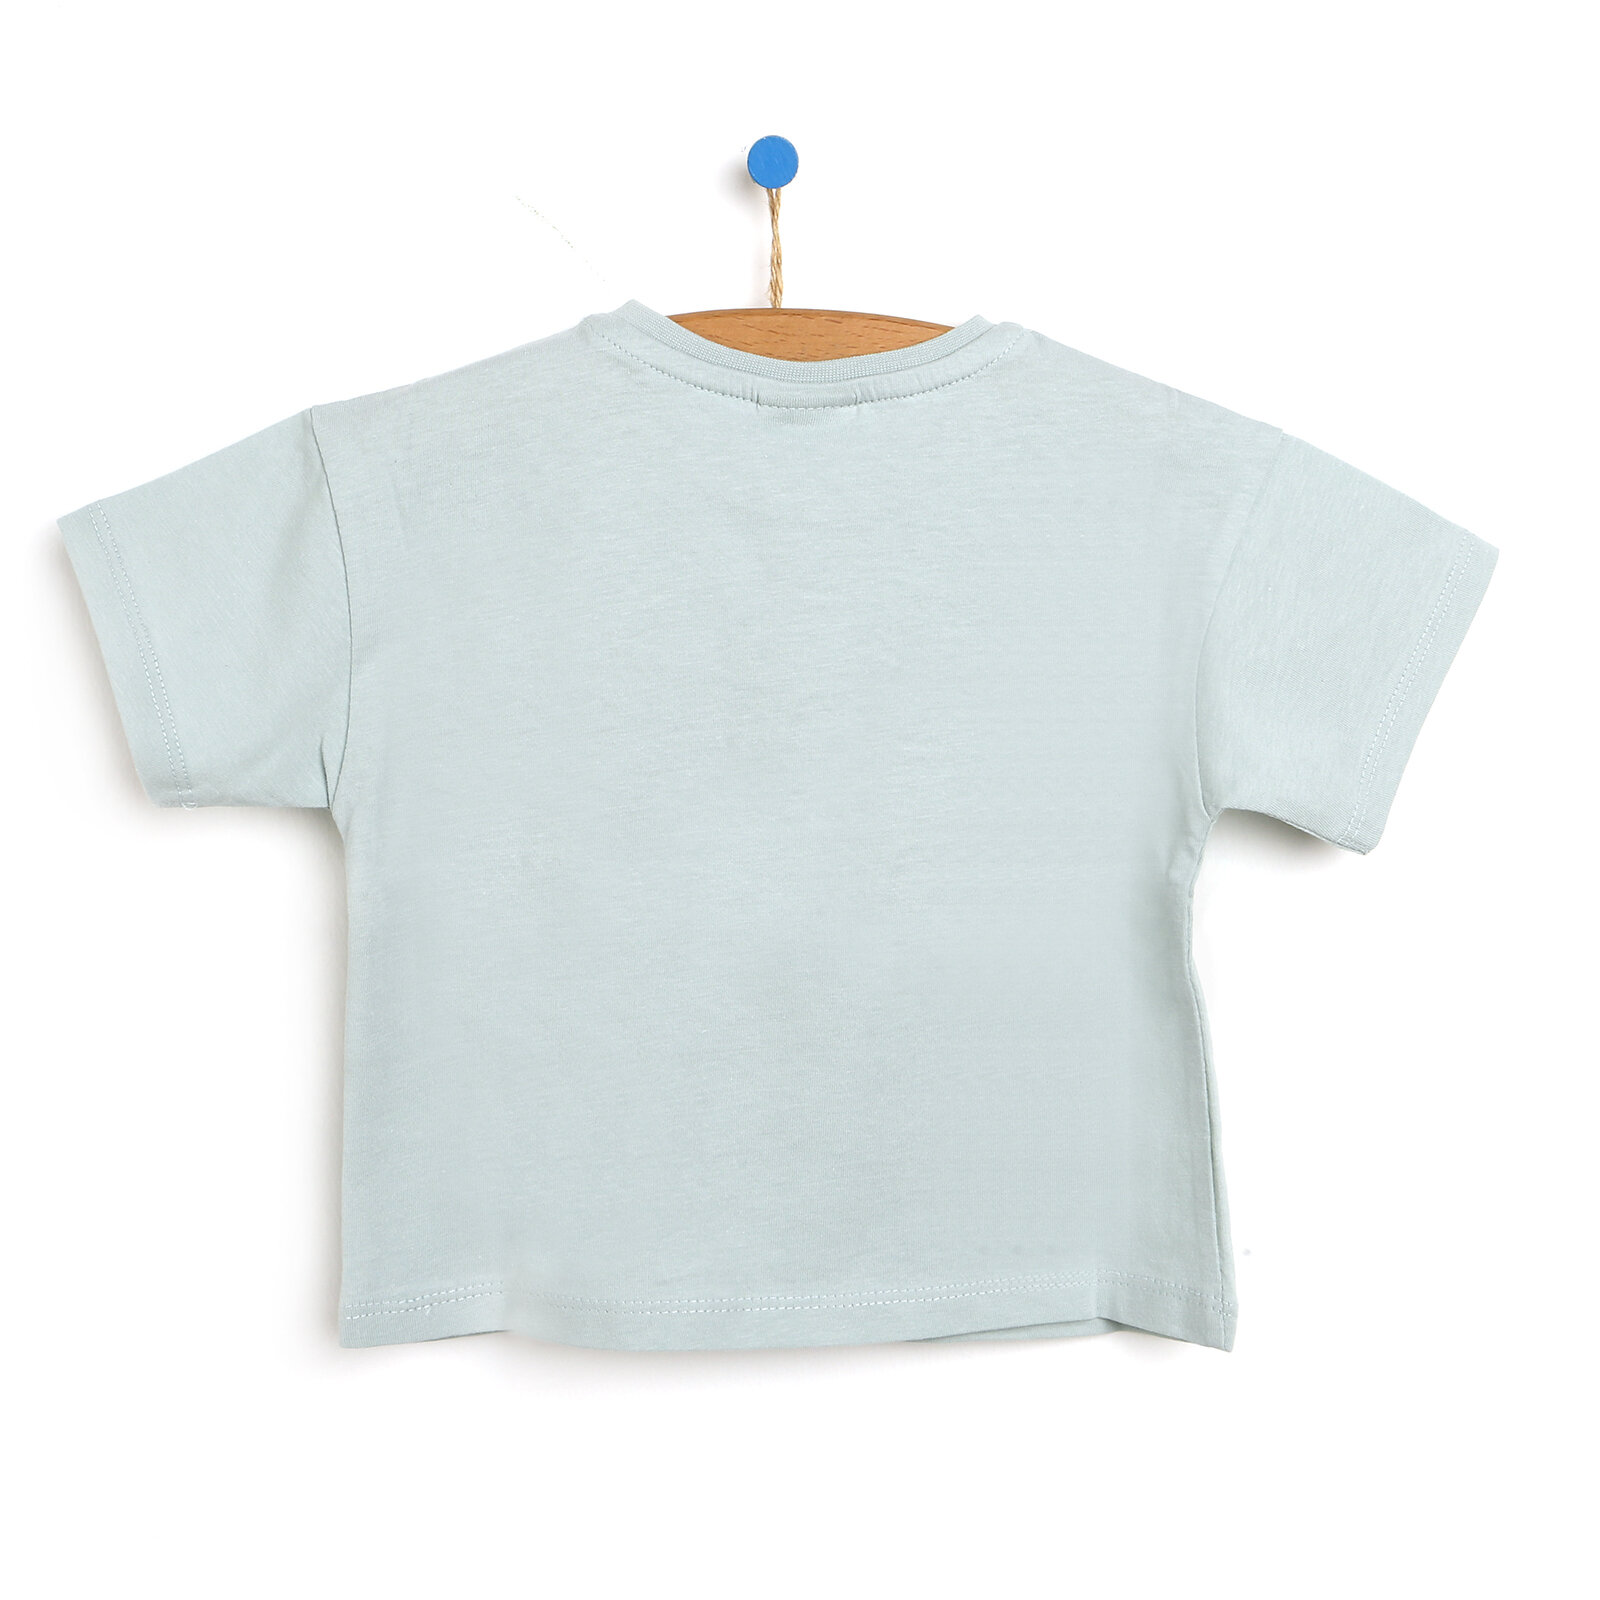 Better Cotton Erkek Bebek Baskılı Rahat Kalıp Tshirt